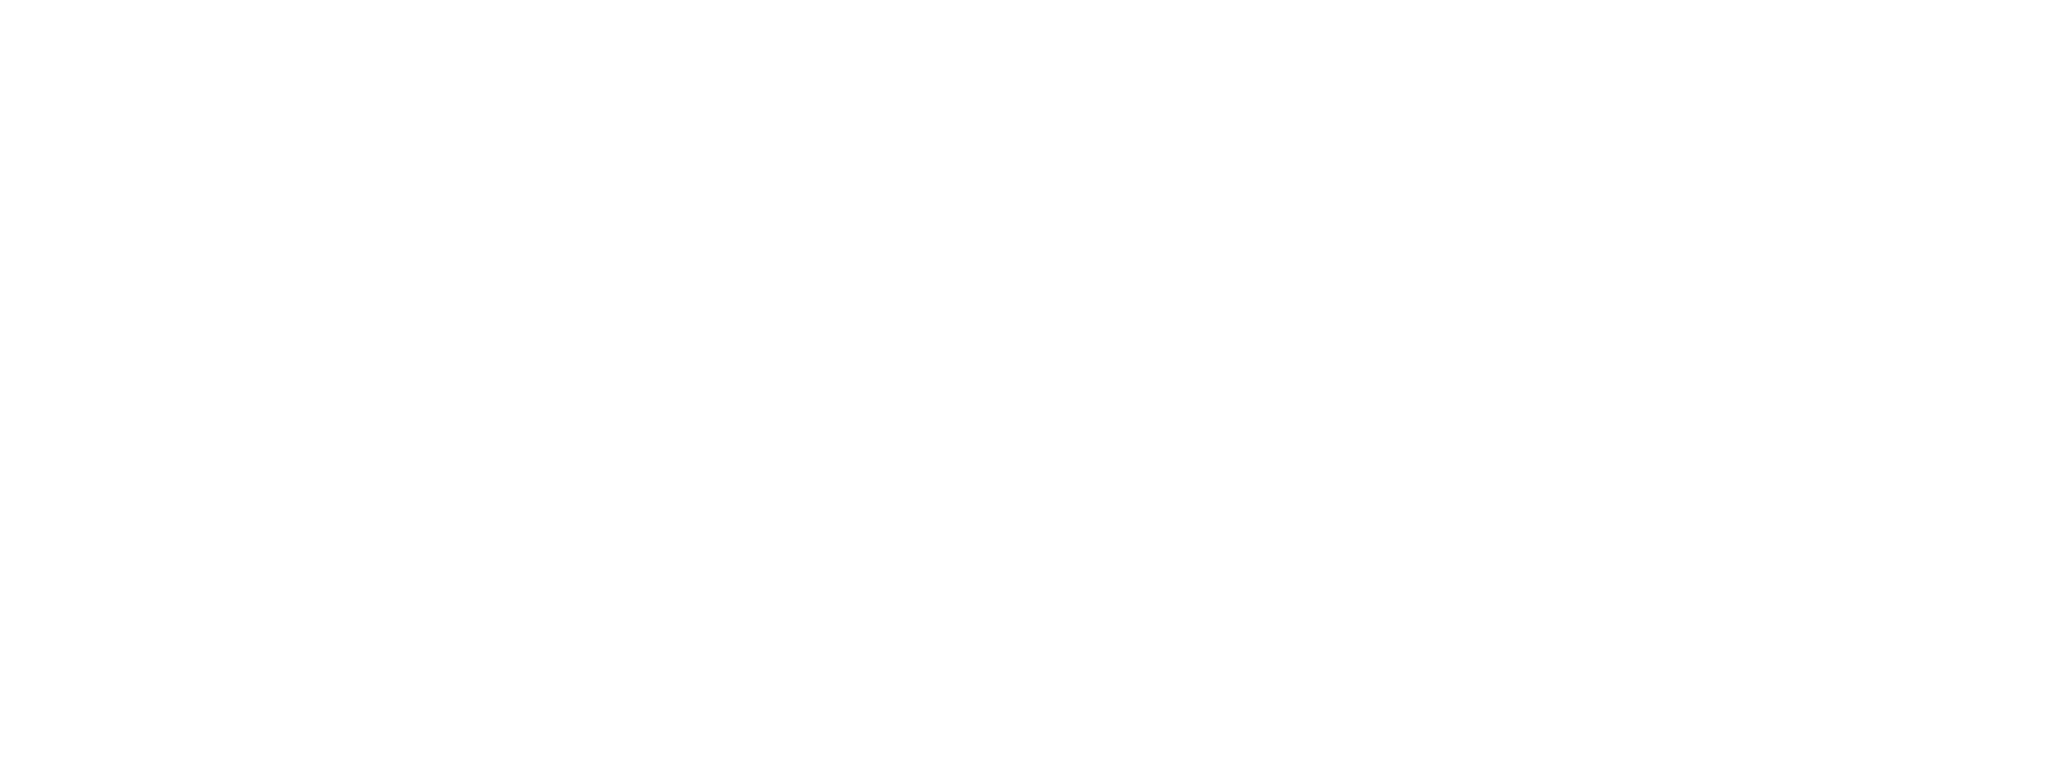 Pensions Regulator logo